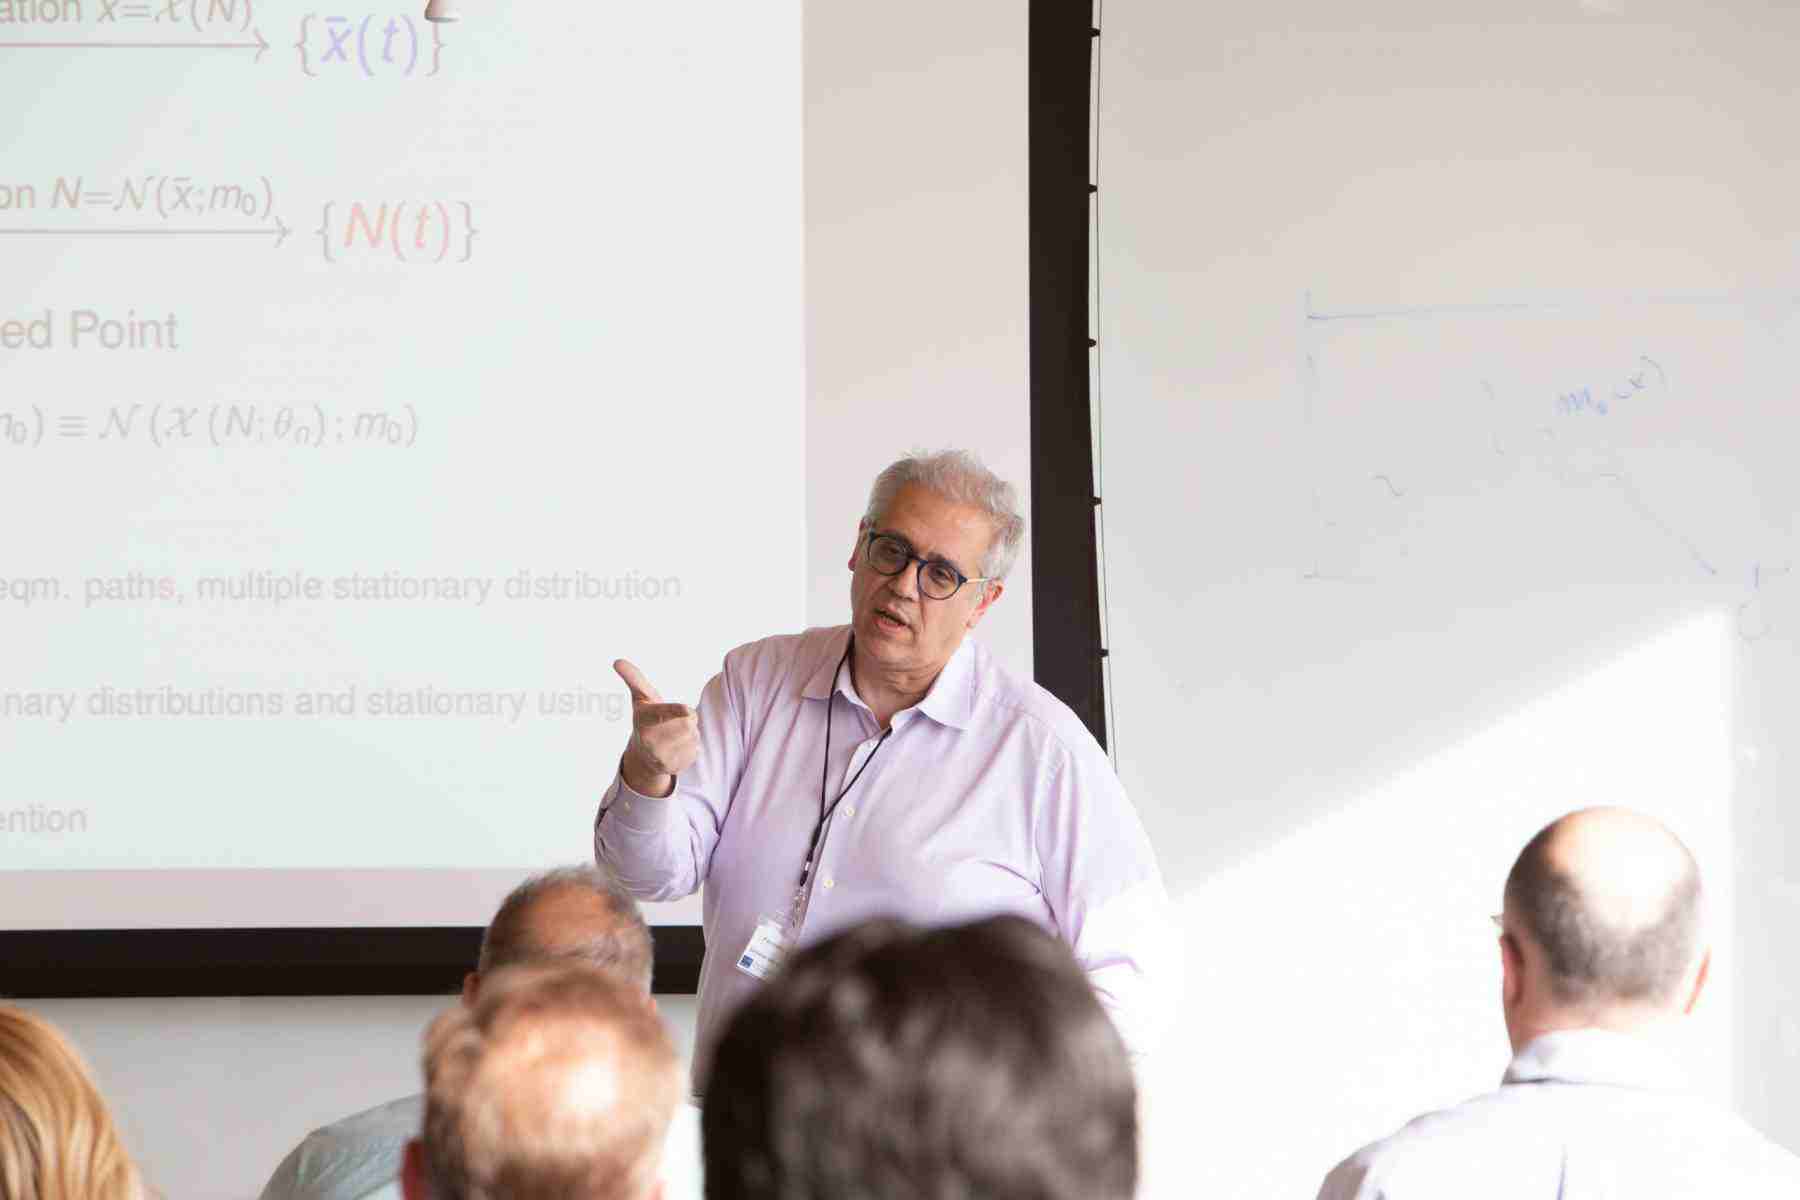 Fernando Alvarez (University of Chicago) presents during a research seminar.